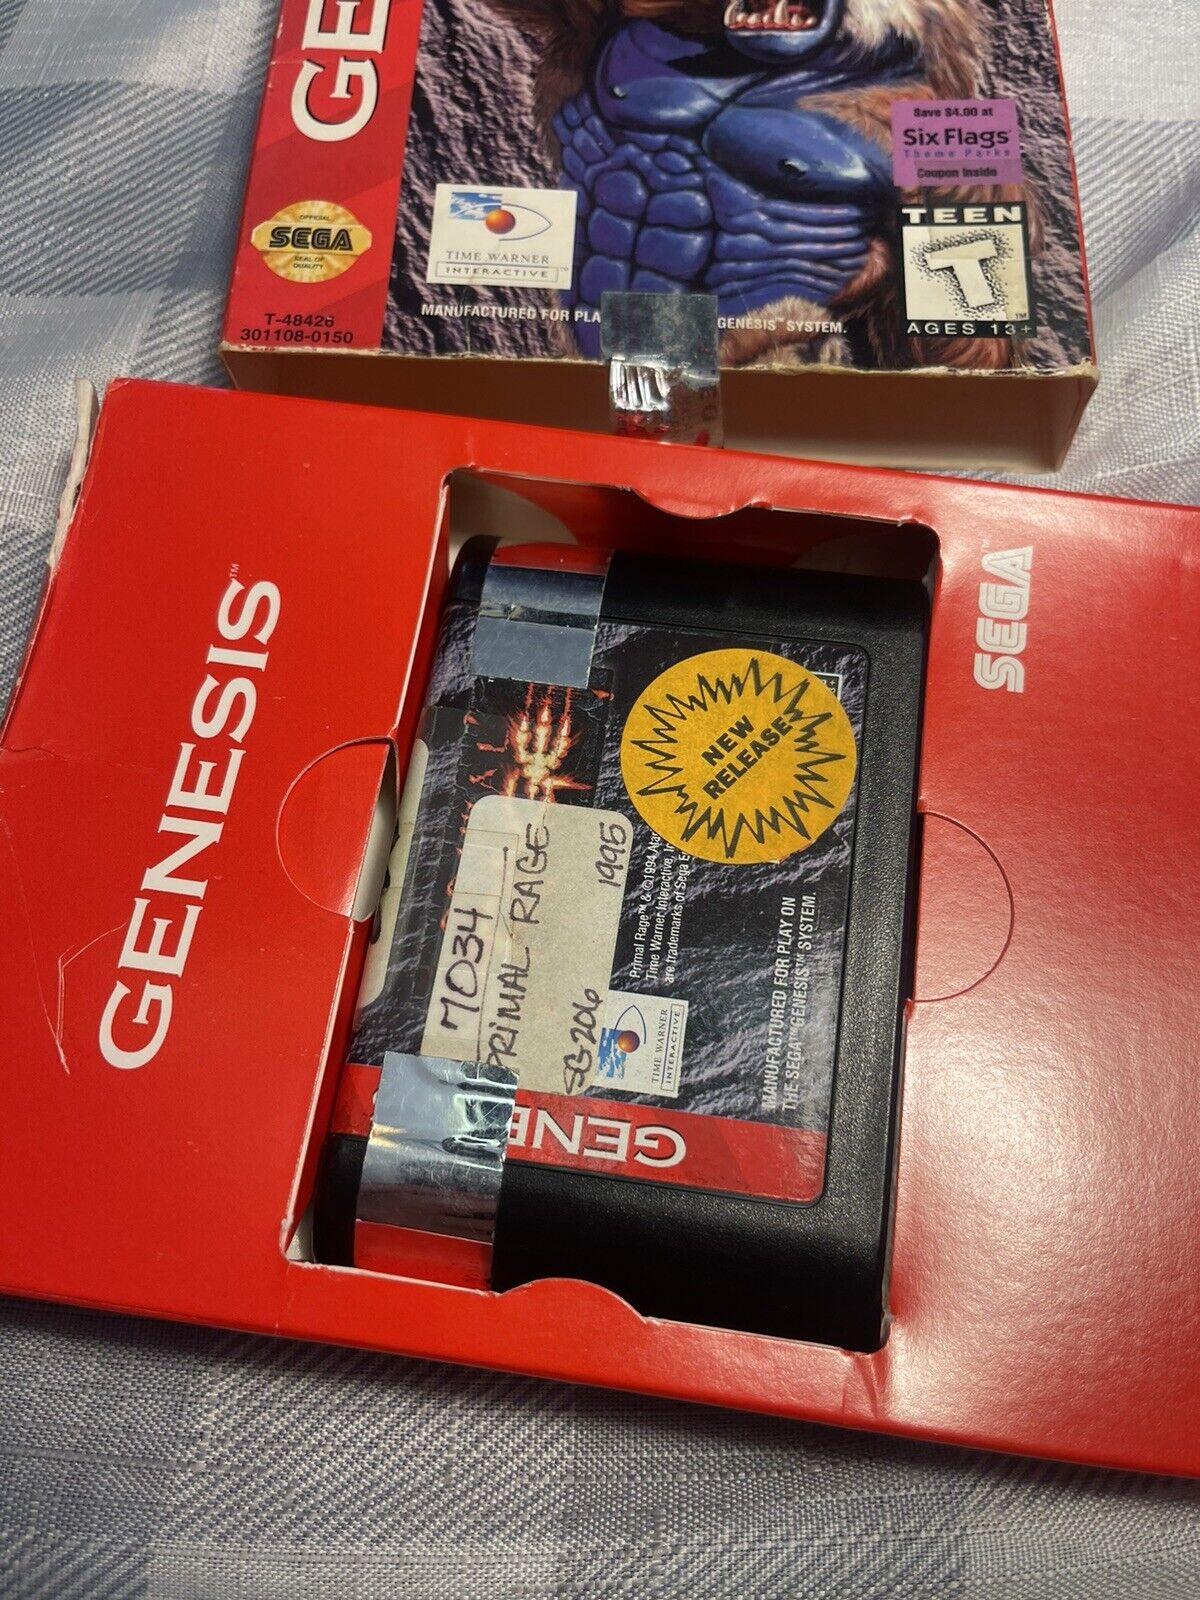 Primal Rage Sega Genesis Video Game with Box